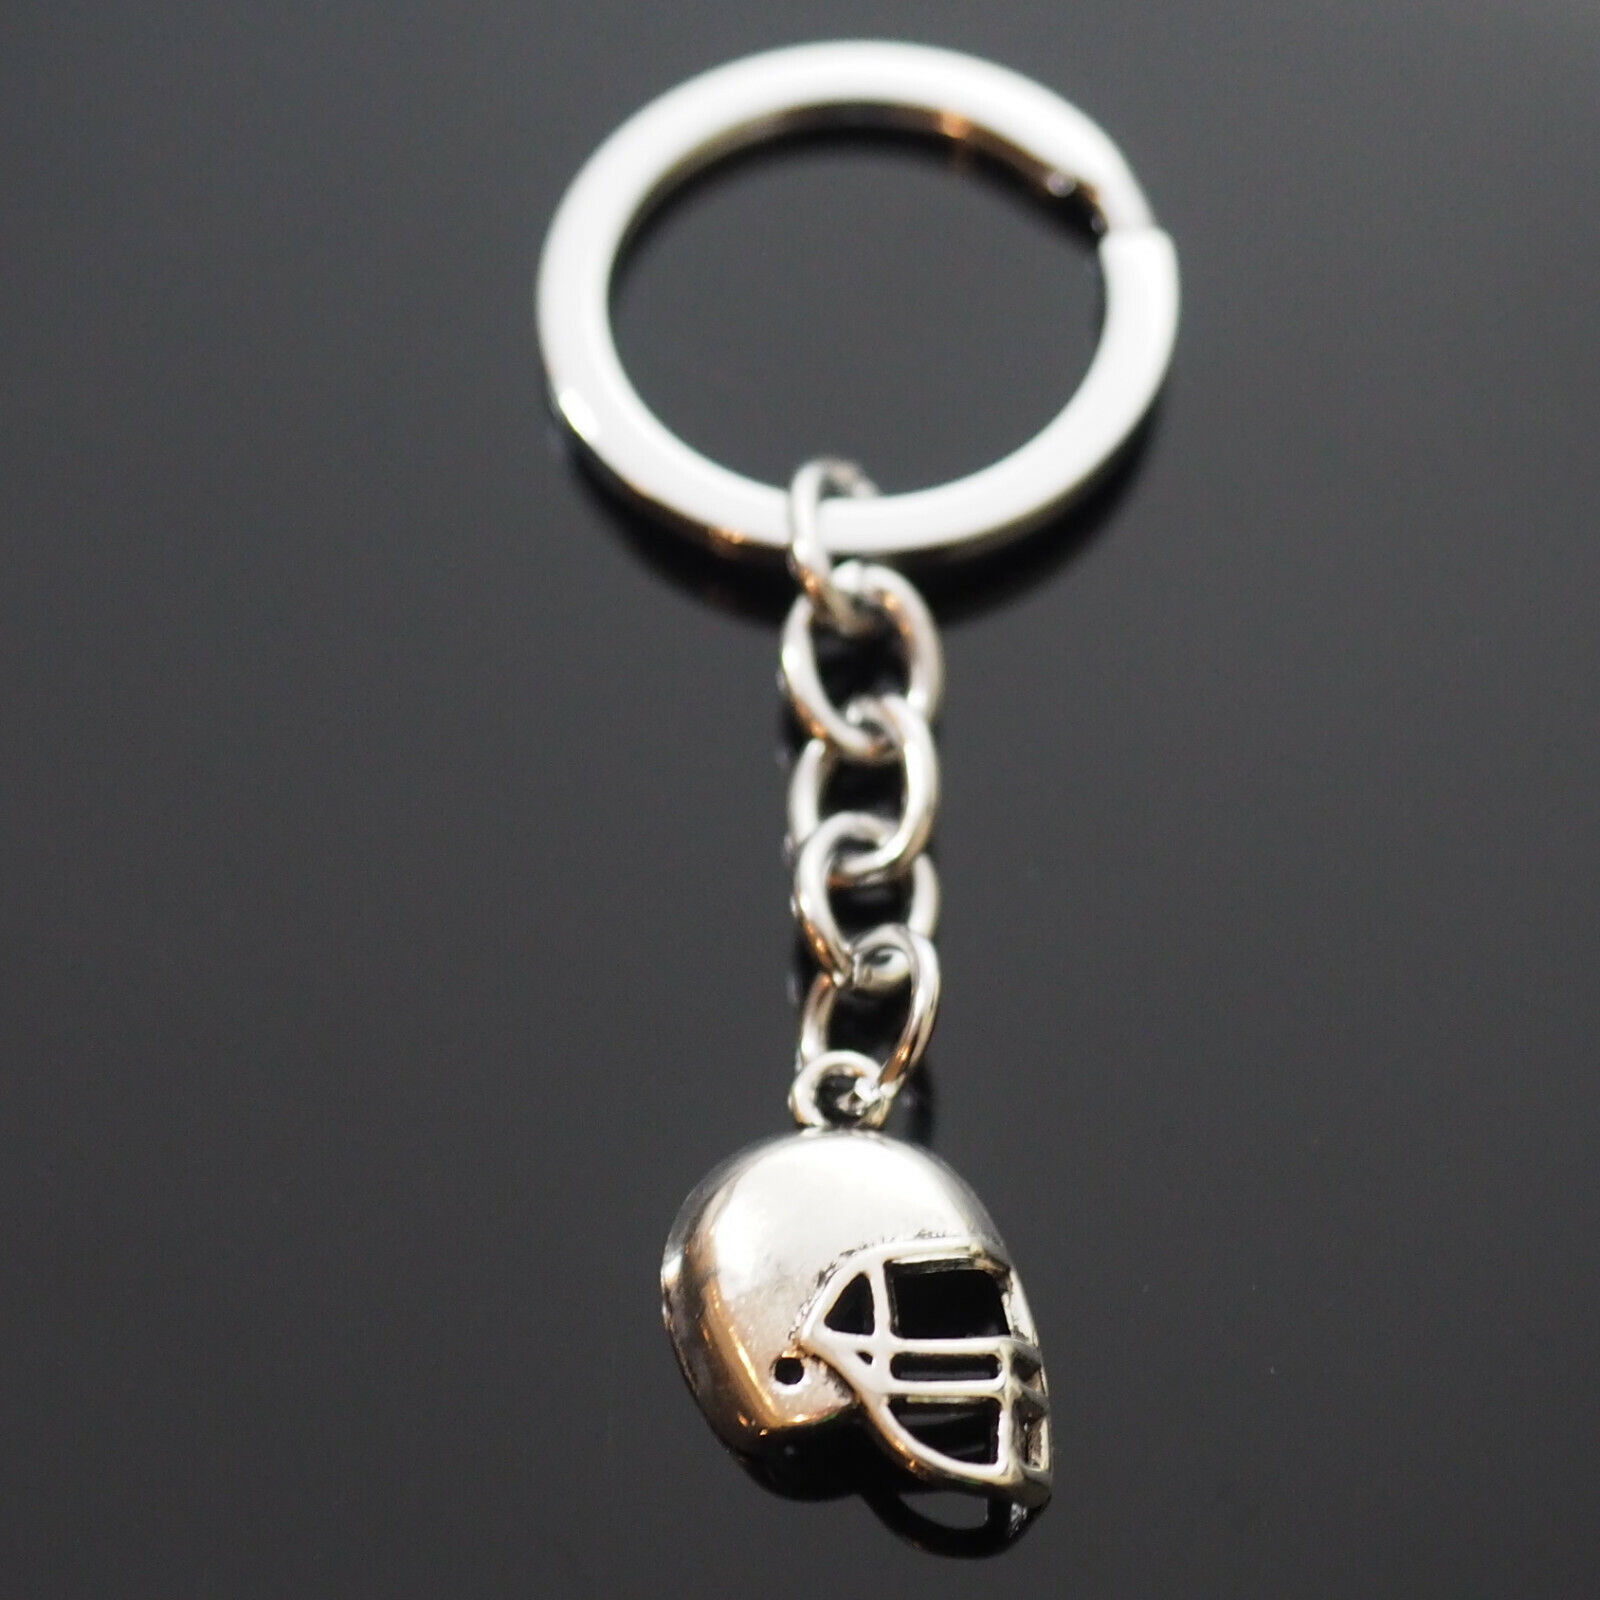 Football Helmet Charm Pendant Keychain Gift Coach Player Fan